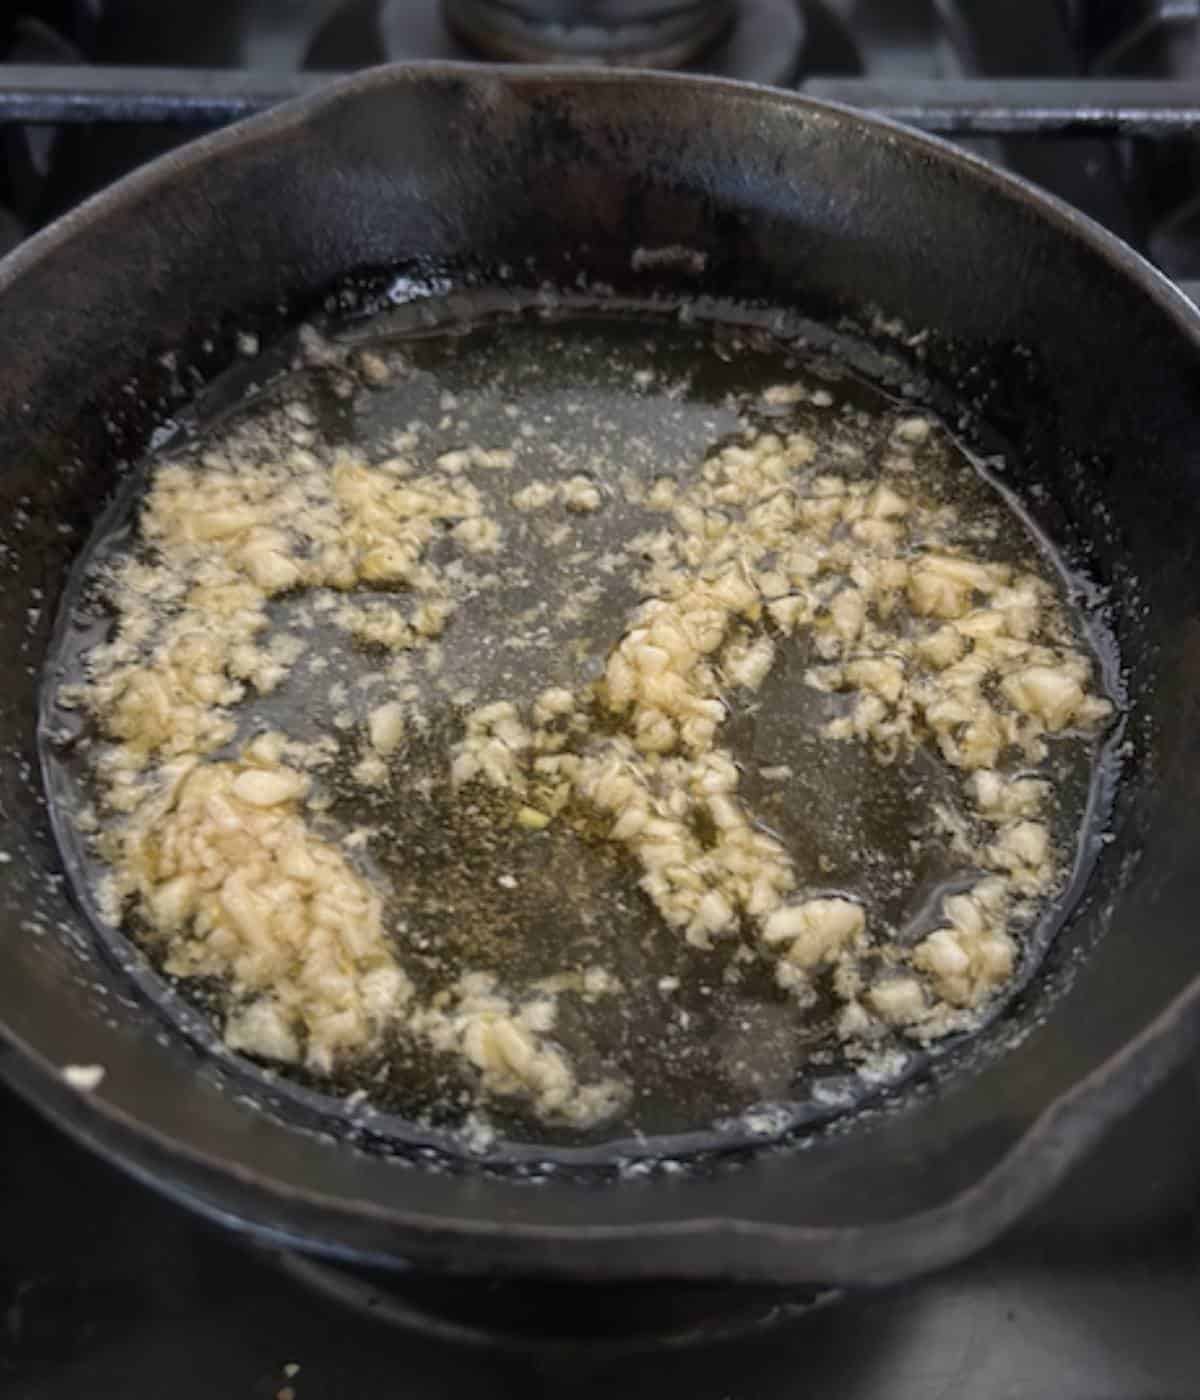 Garlic butter in skillet.